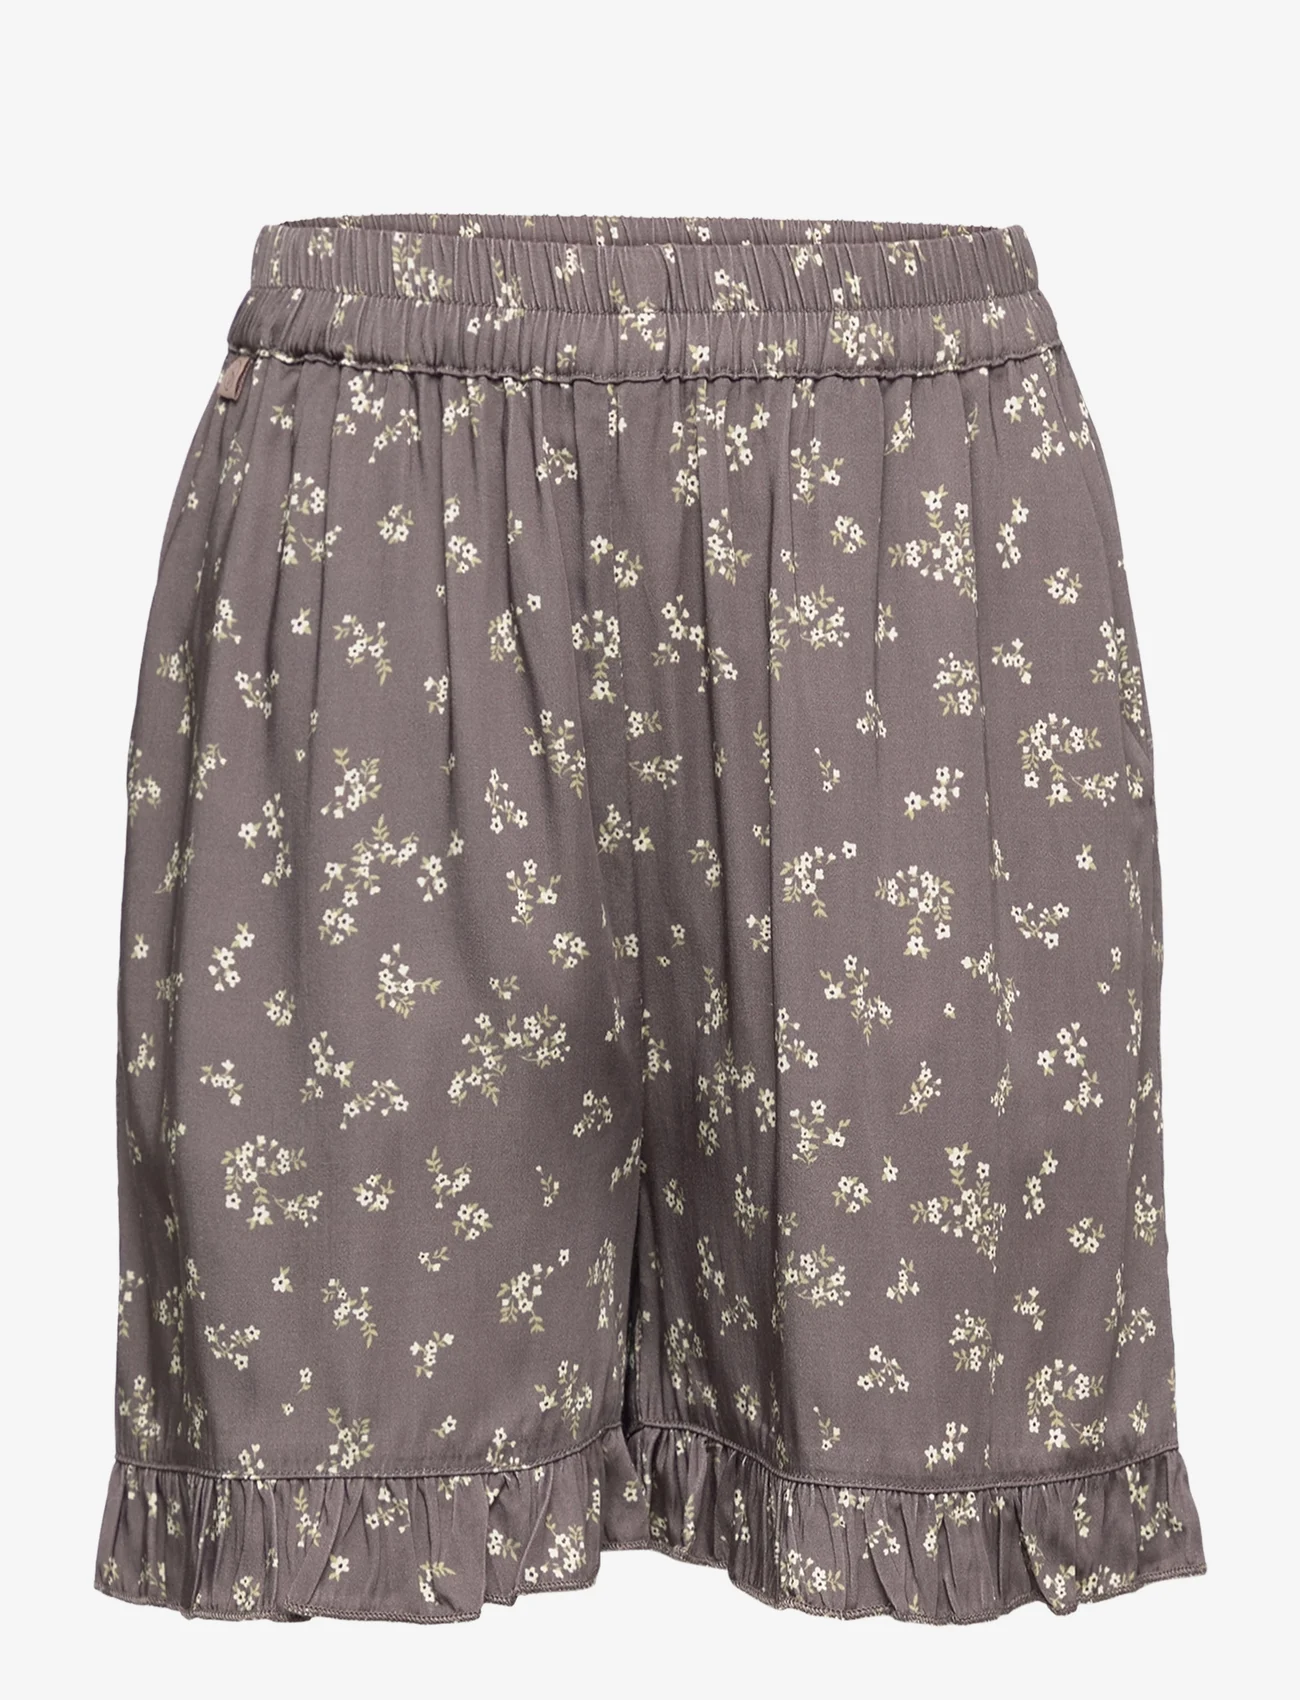 Rosemunde Kids - Shorts - chino lühikesed püksid - grey summer flower print - 0